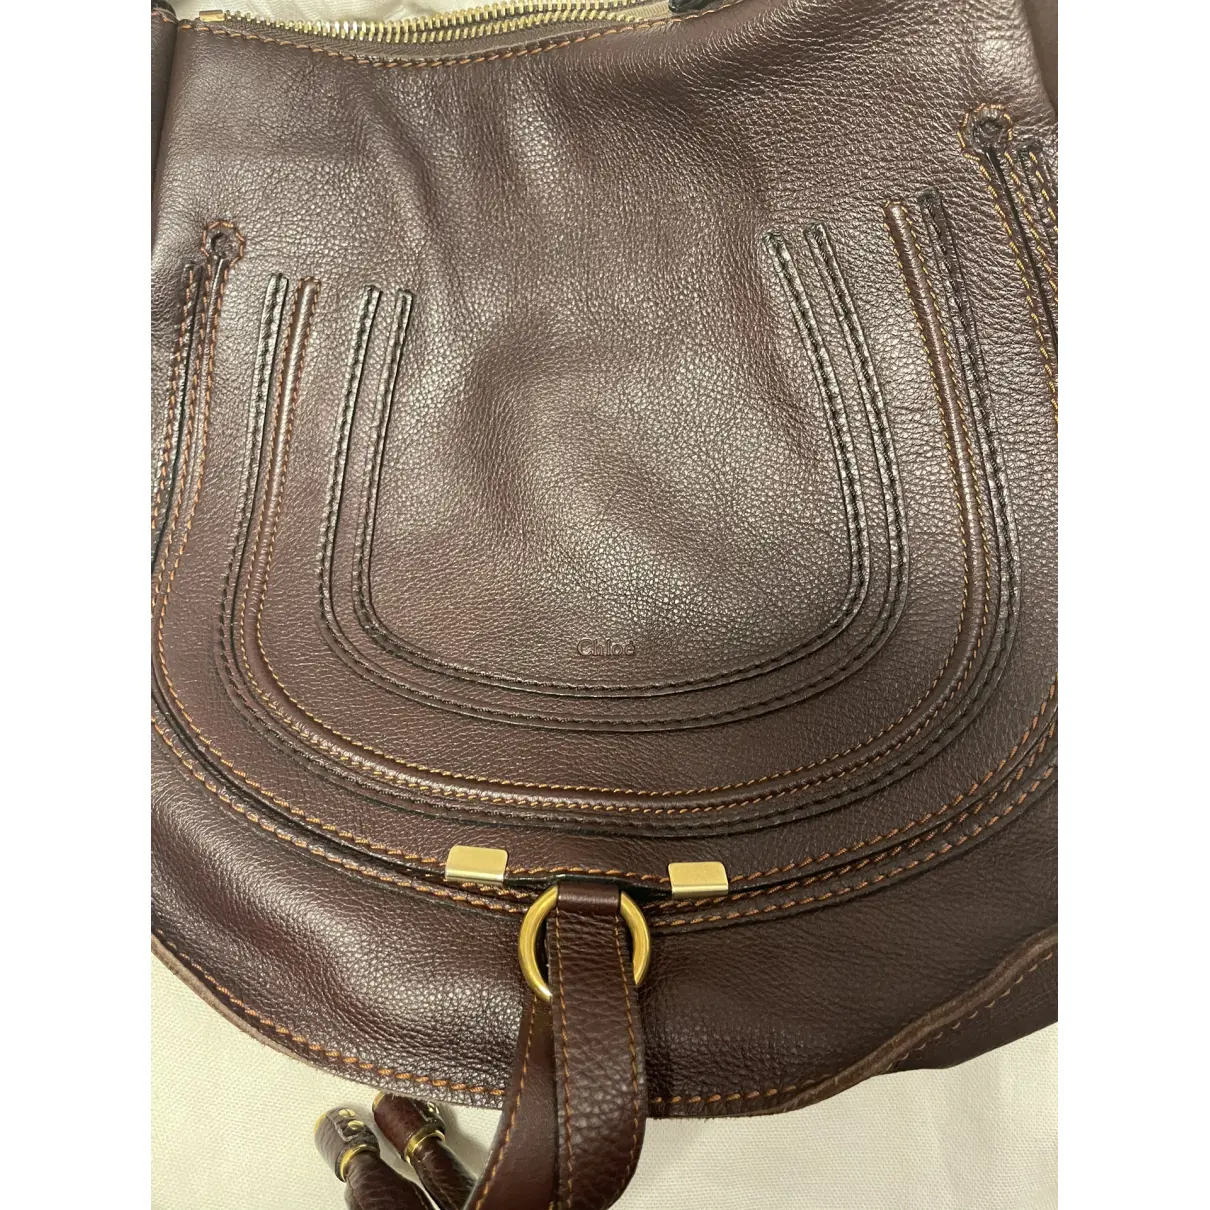 Buy Chloé Marcie Messenger leather crossbody bag online